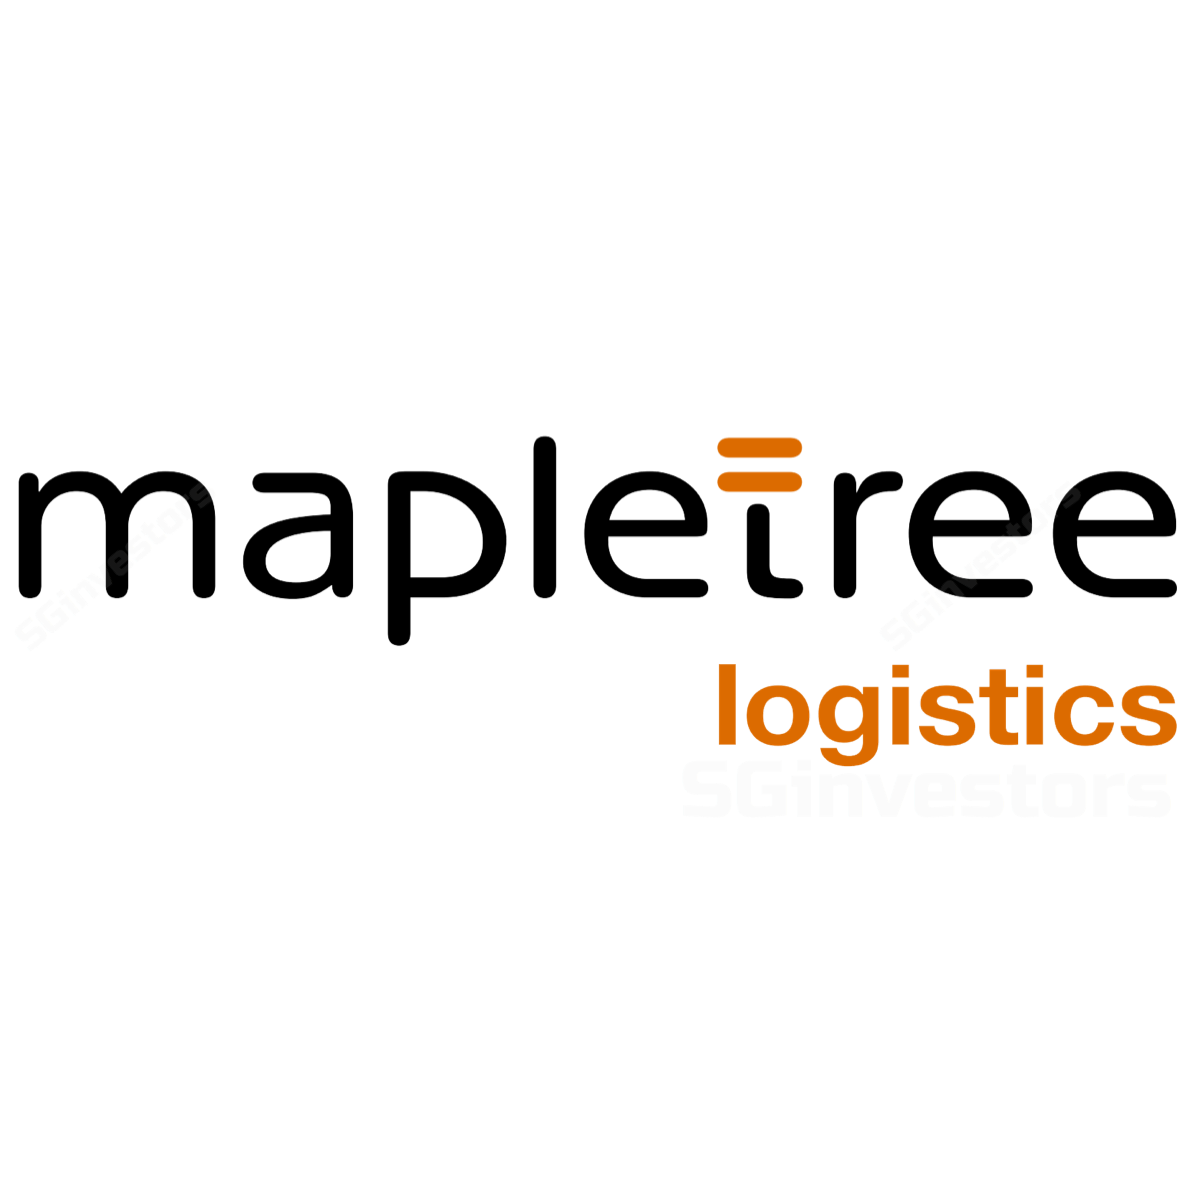 Mapletree Logistics Trust (MLT SP) - Maybank Kim Eng 2017-05-02: Oversupply still a drag; Prefer AREIT